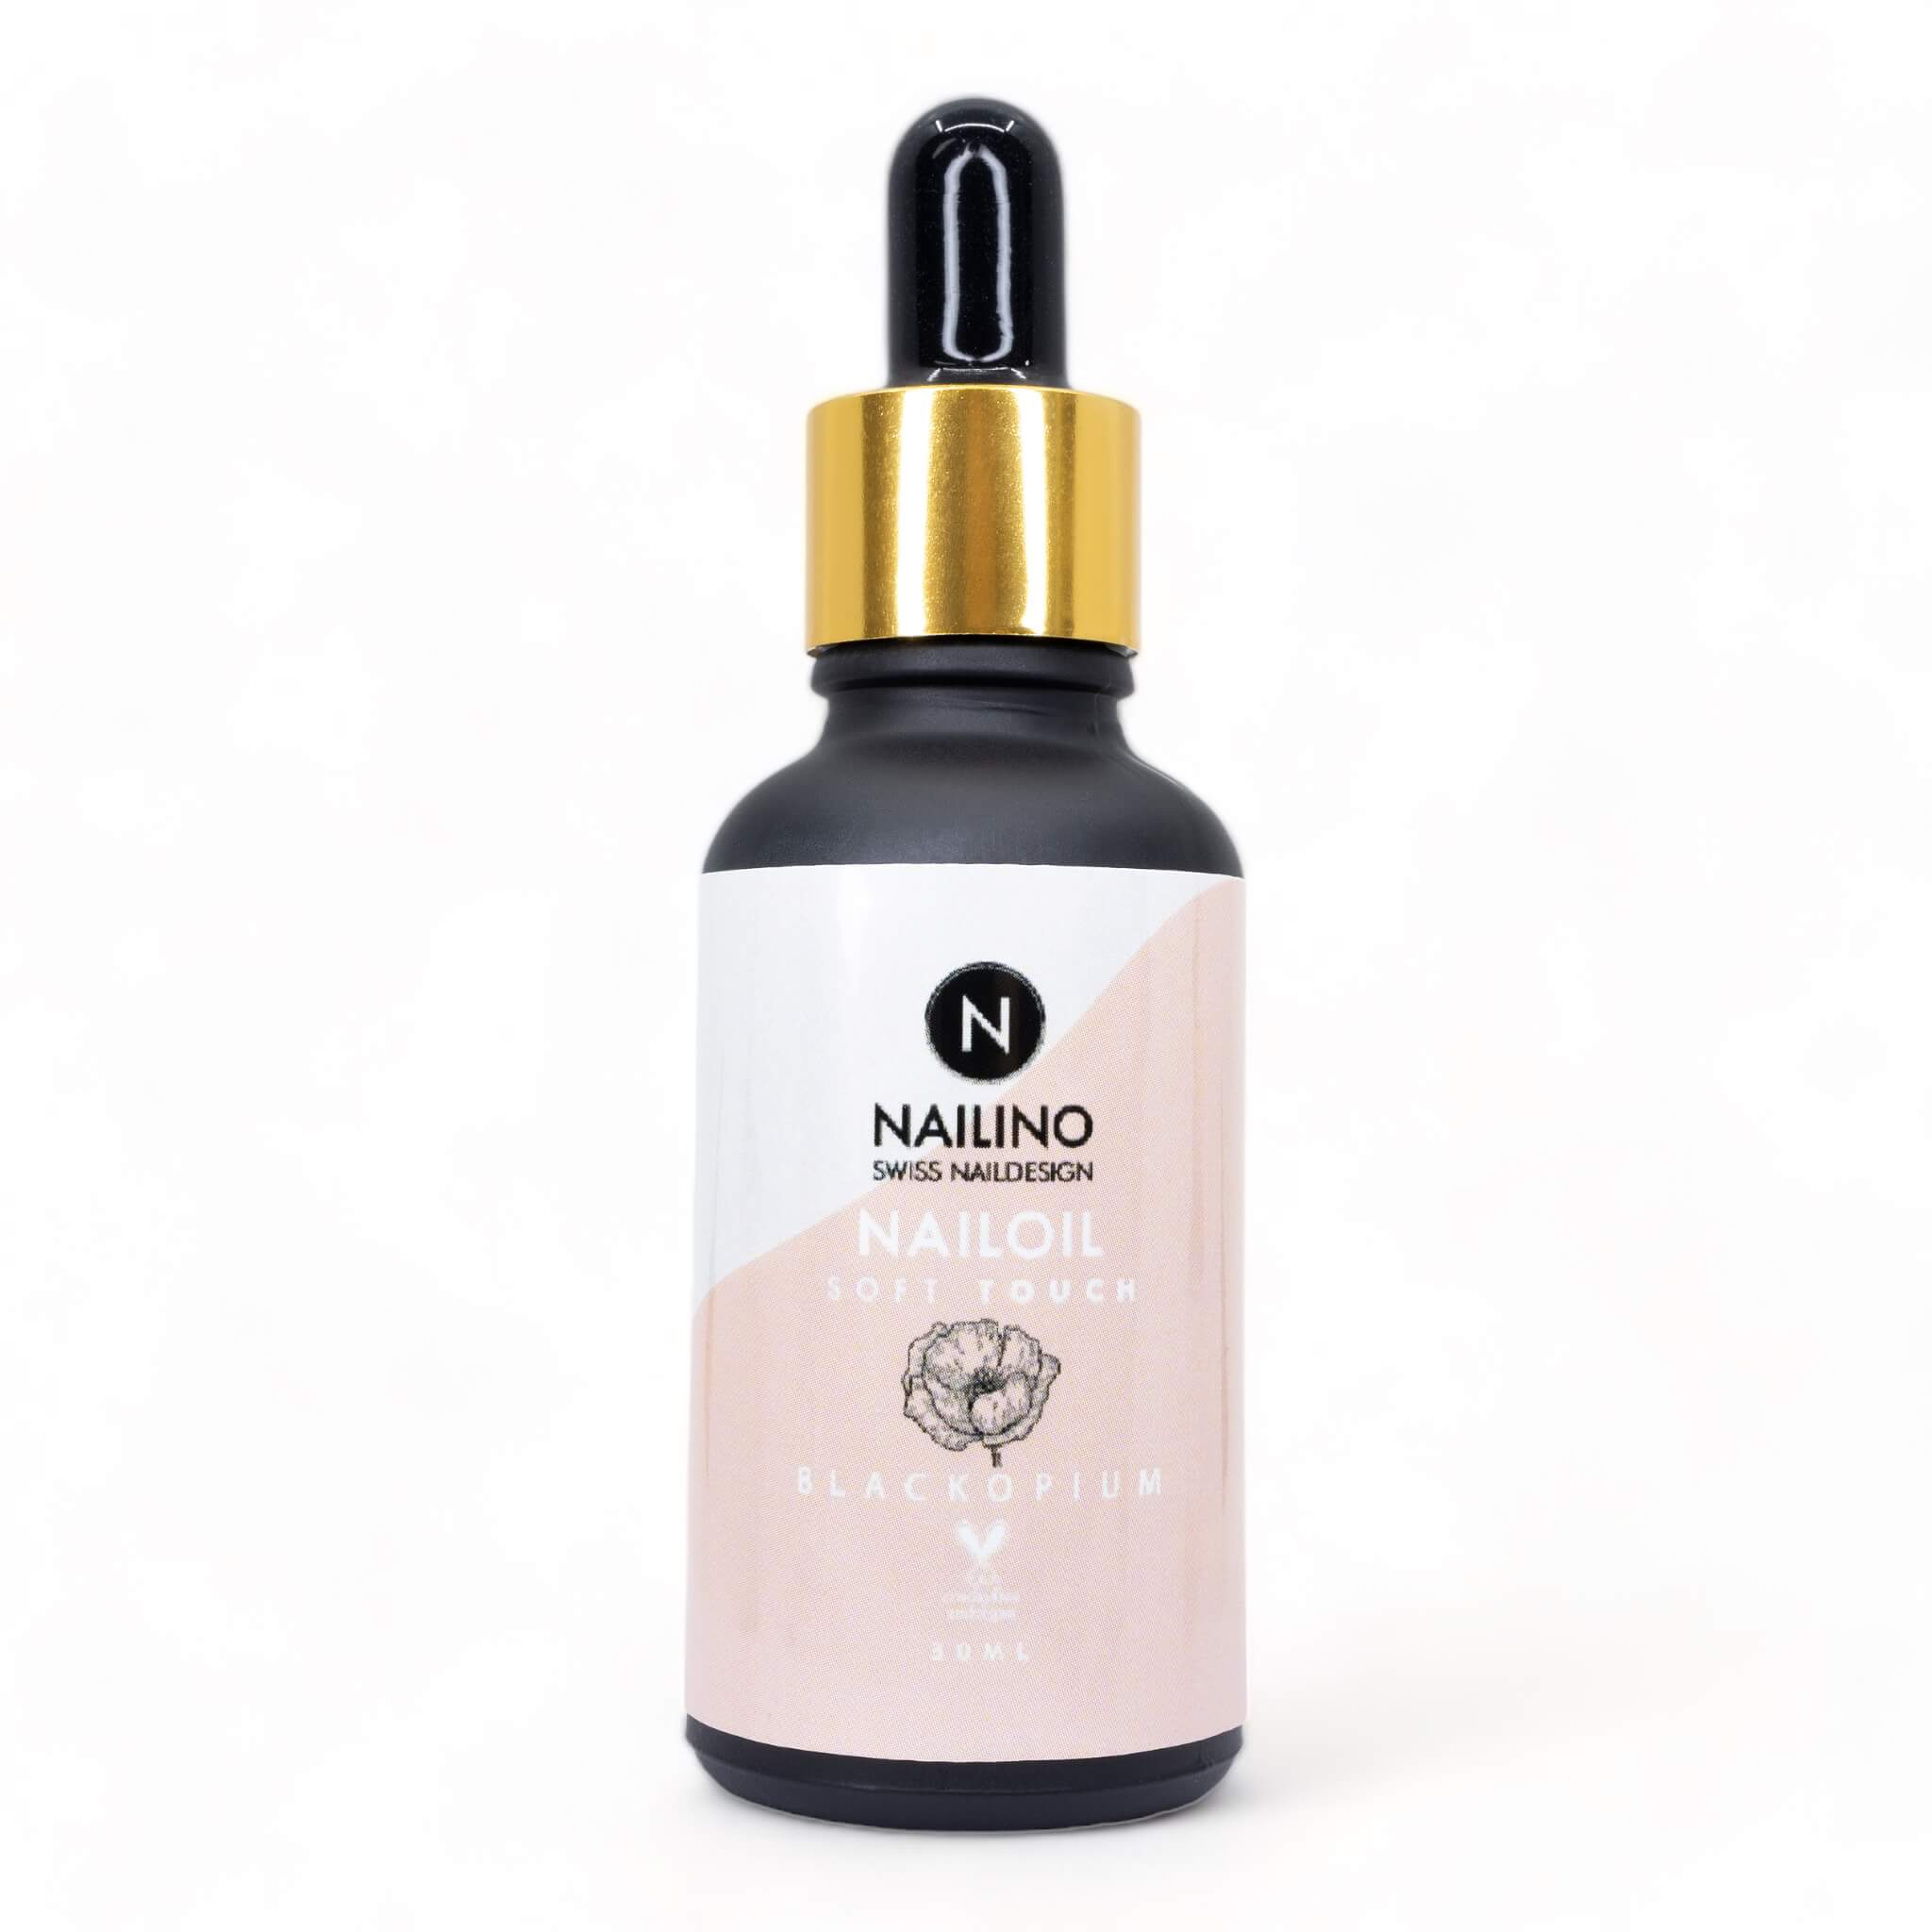 NAILINO Nagelöl - Black Opium / 30ml